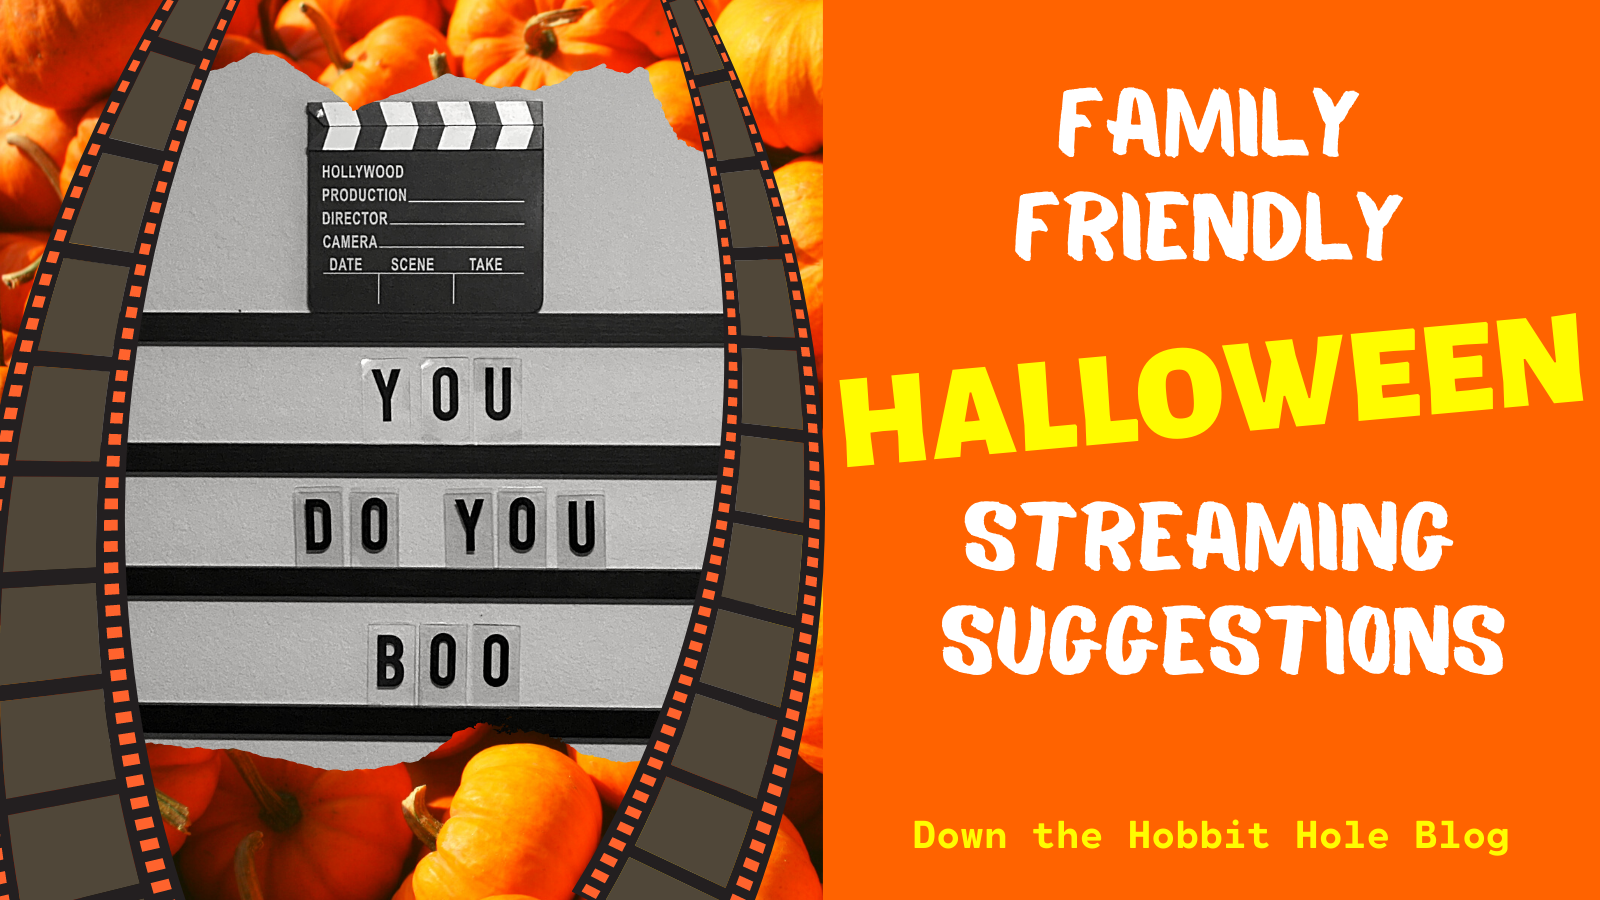 Family Friendly Halloween Movies